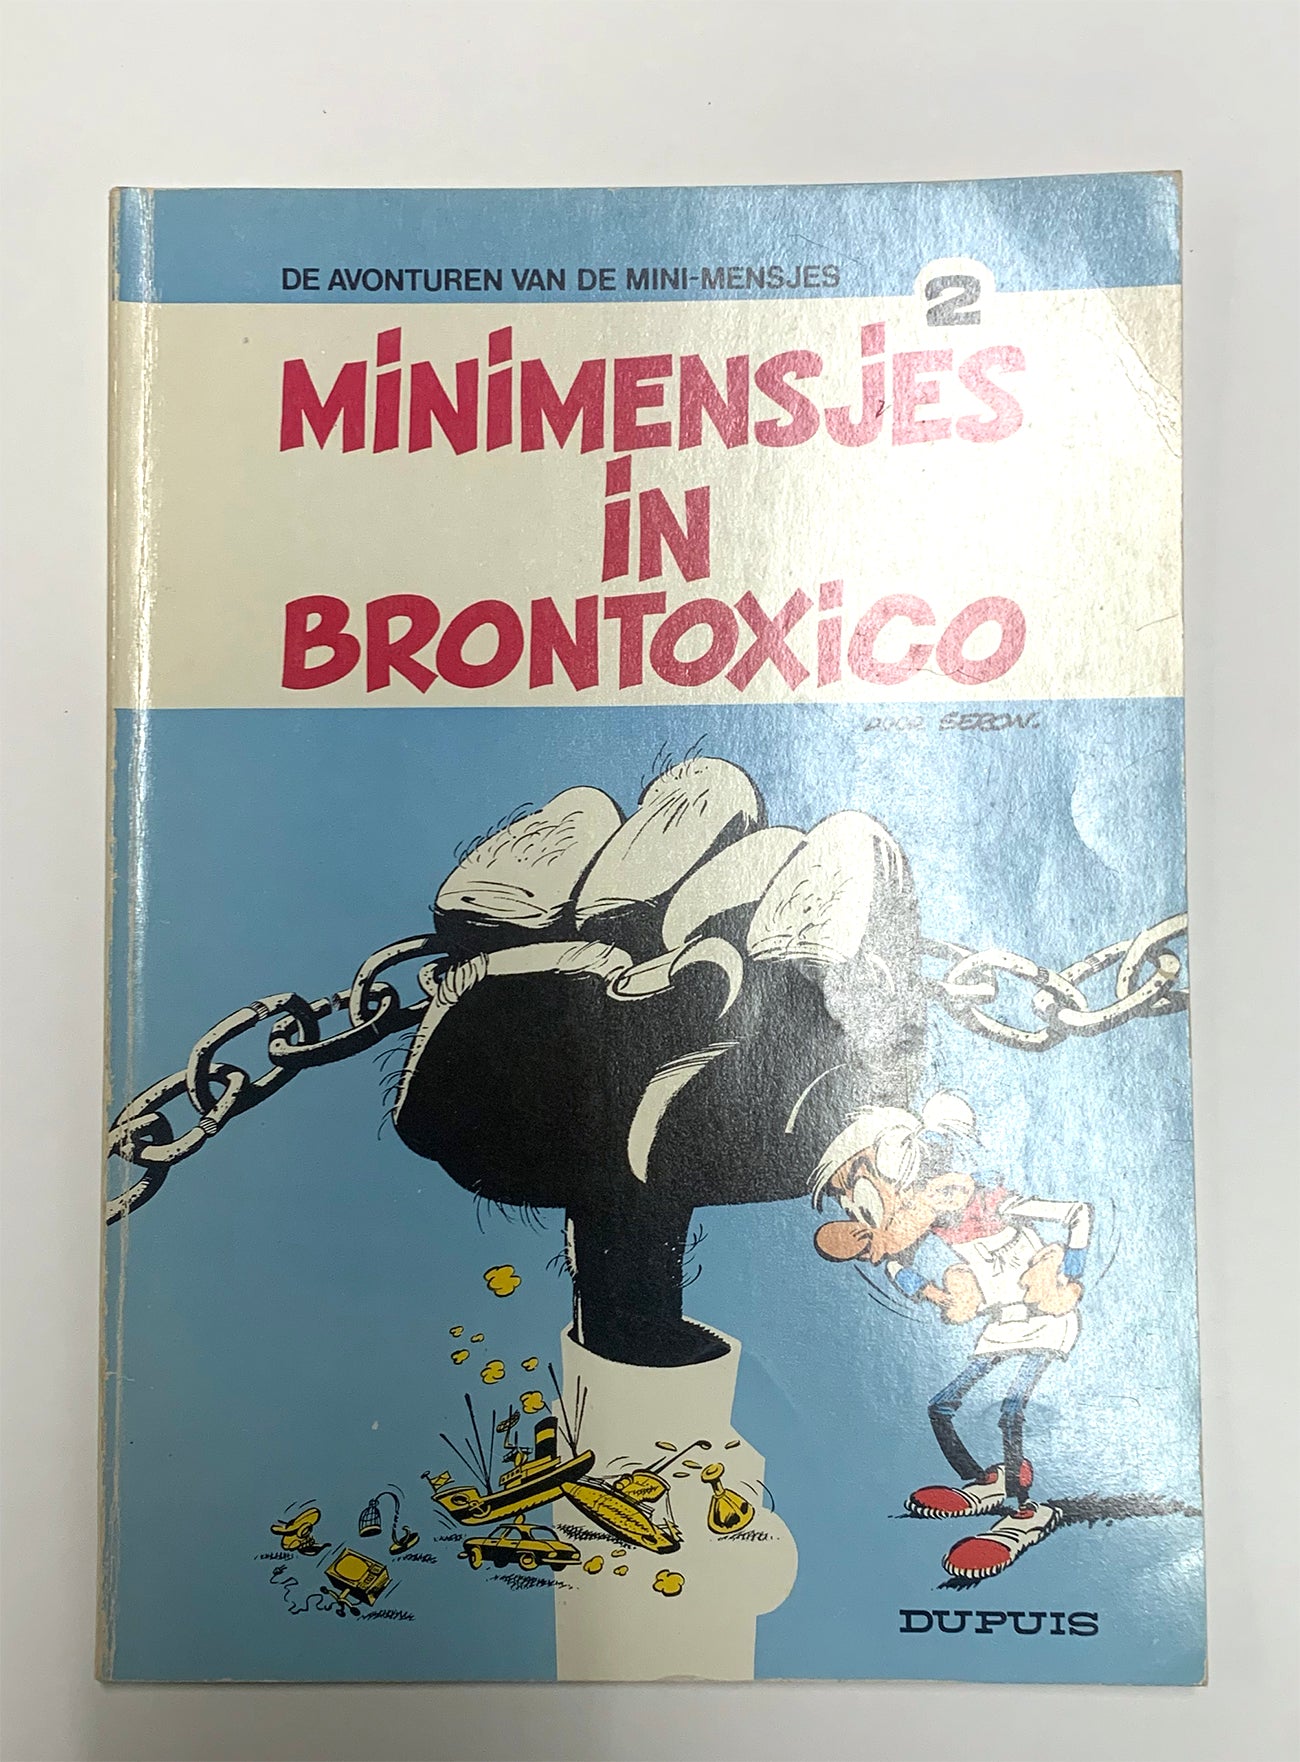 De mini-mensjes- Minimensjes in Brontoxico, nummer 2